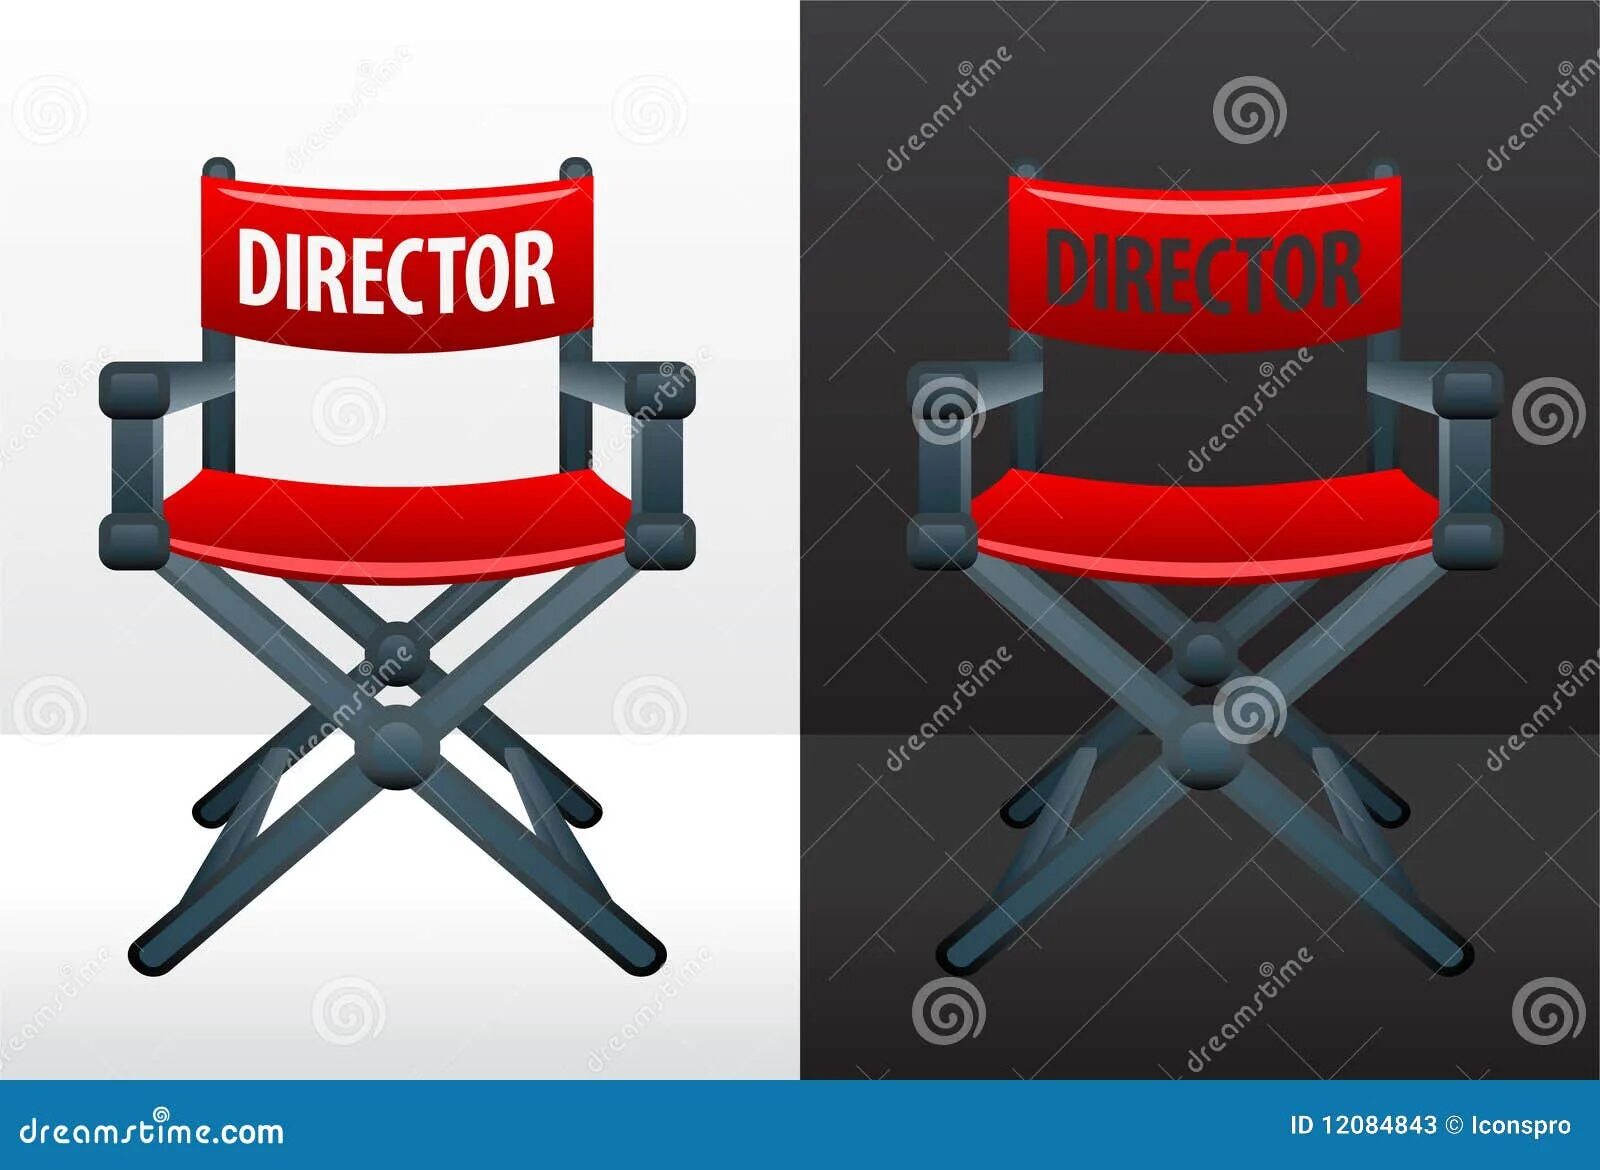 It s on the chair. Стул режиссера. Кнопка на стуле. Трибуна кресло вектор. Стул директора на съемках символ.